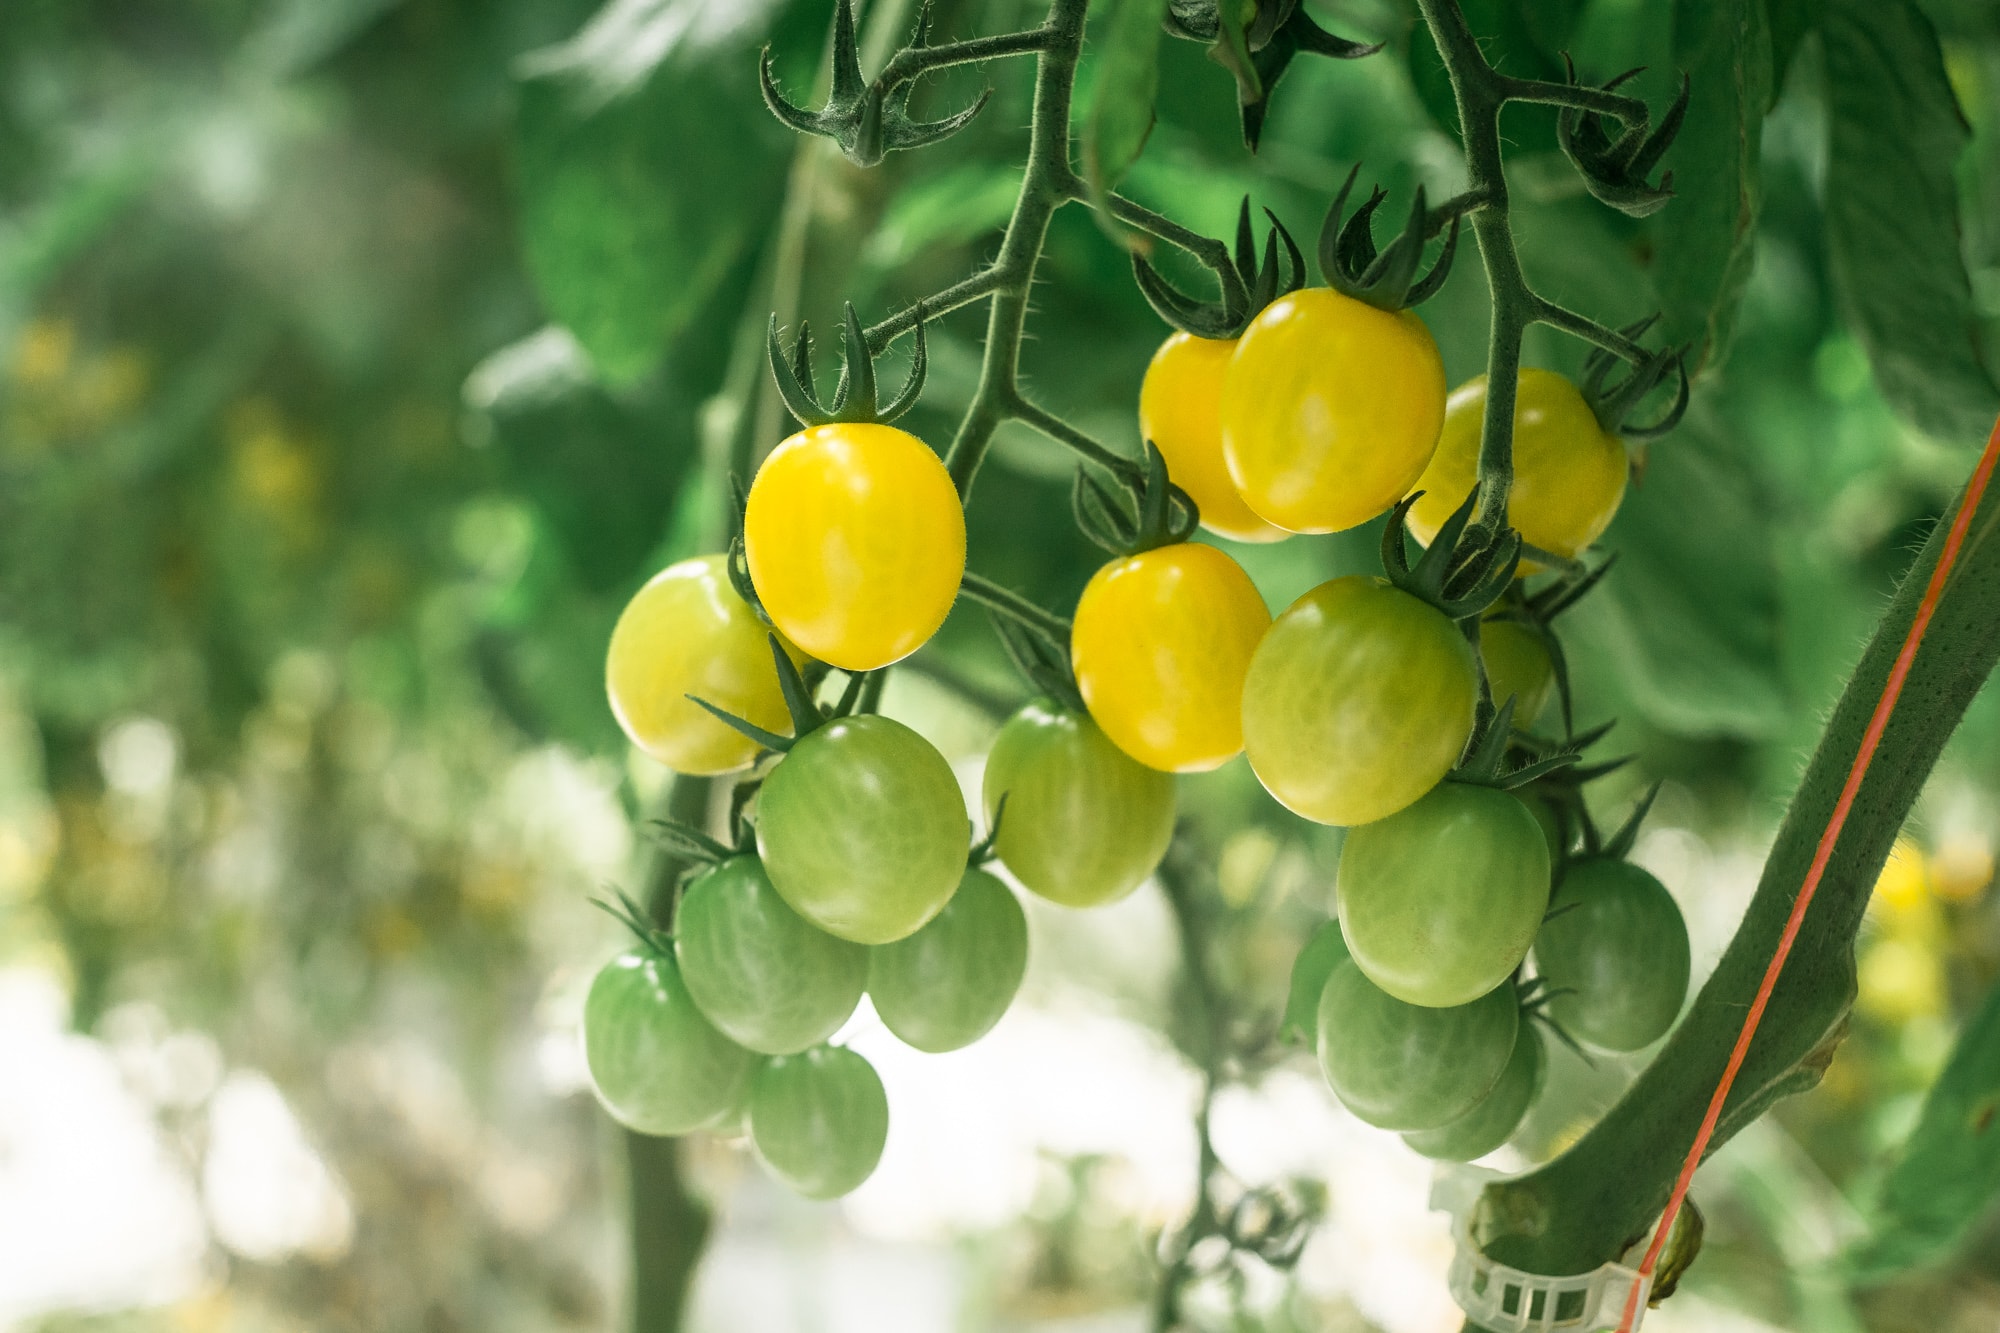 Yellow cherry tomatoes on a tomato plant